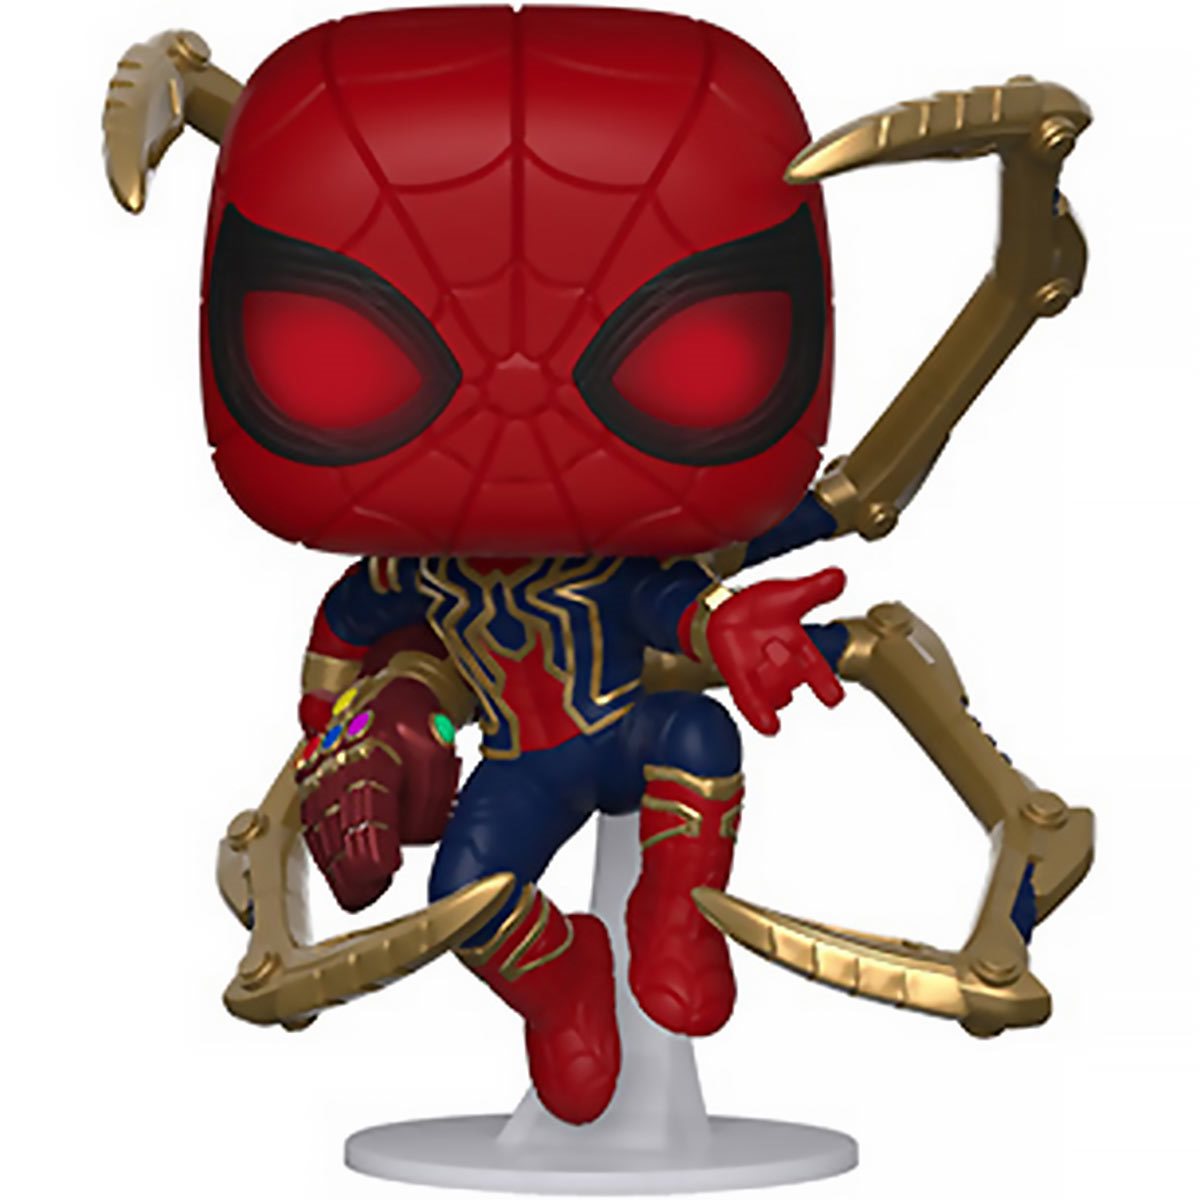 Figurine POP Marvel Avengers Infinity Iron Spider Exclusive